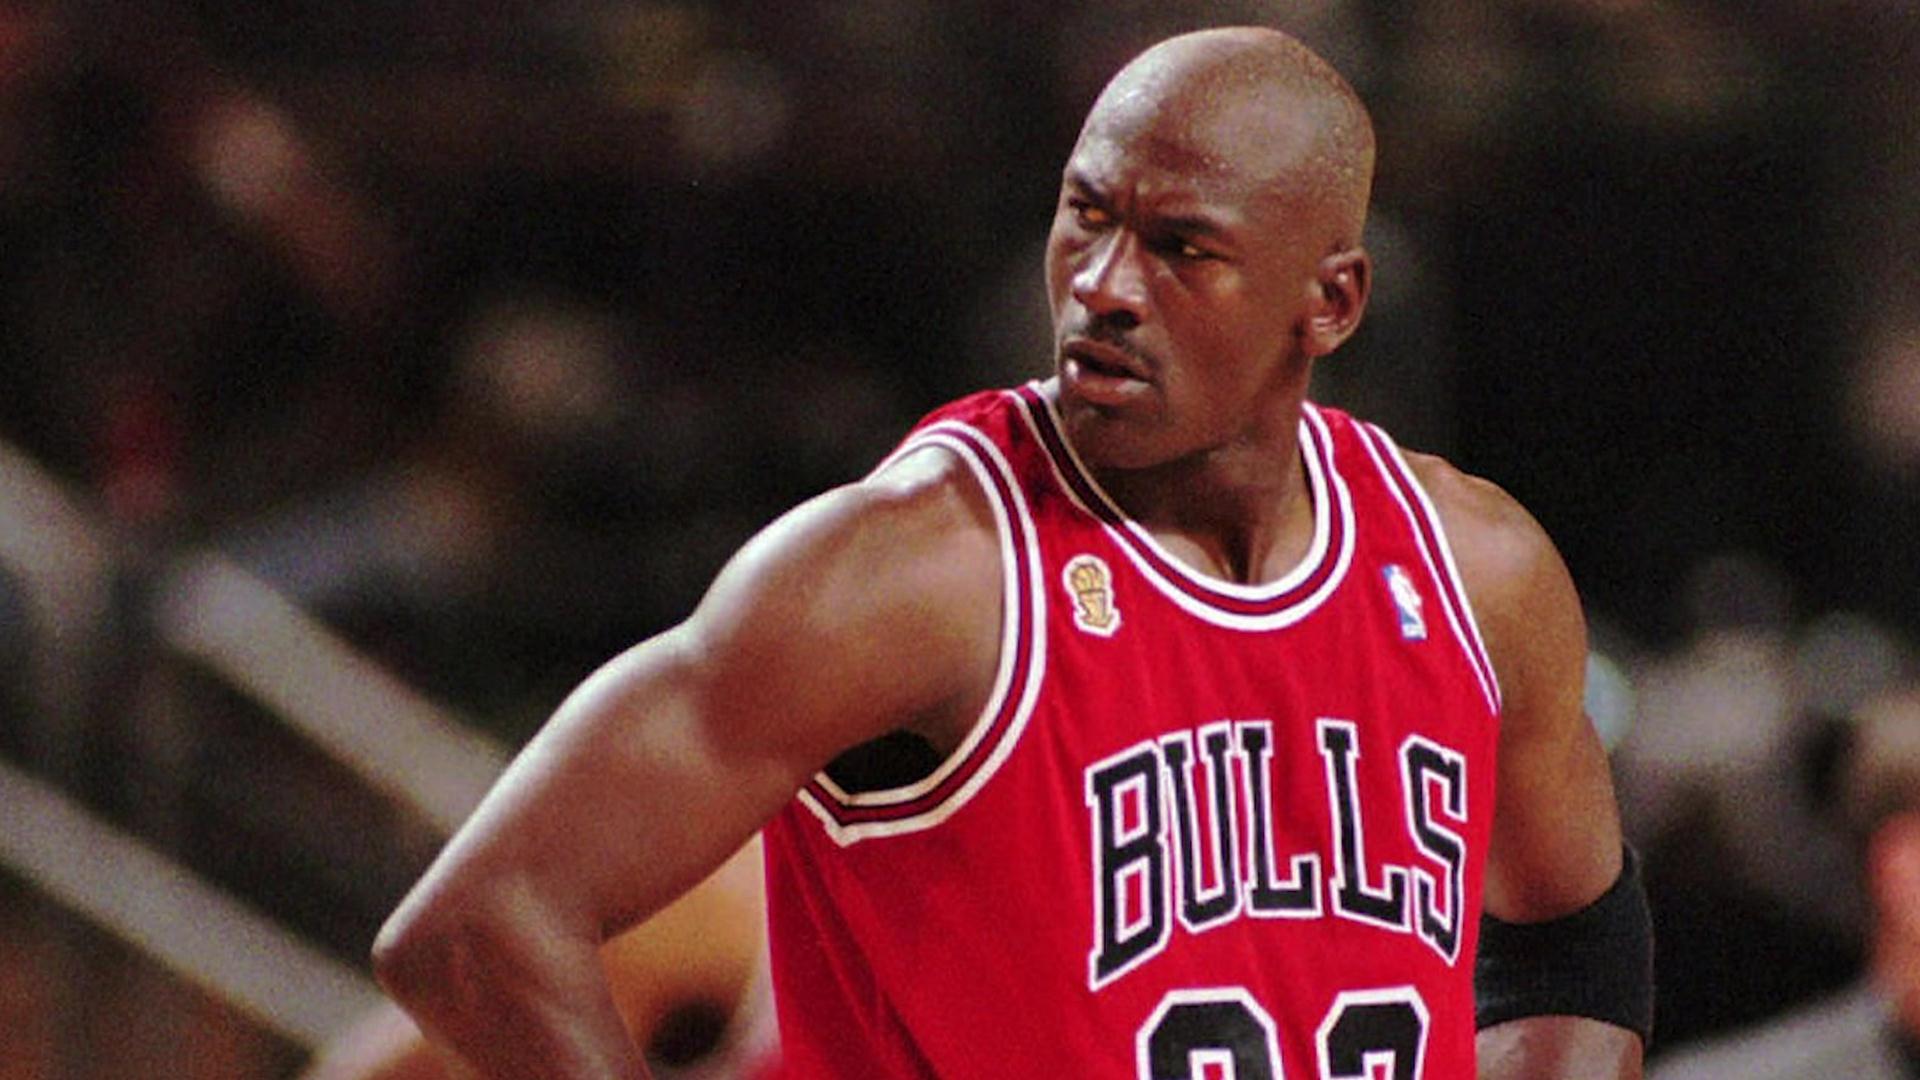 Watch: Michael Jordan scores 49 points against the Orlando Magic